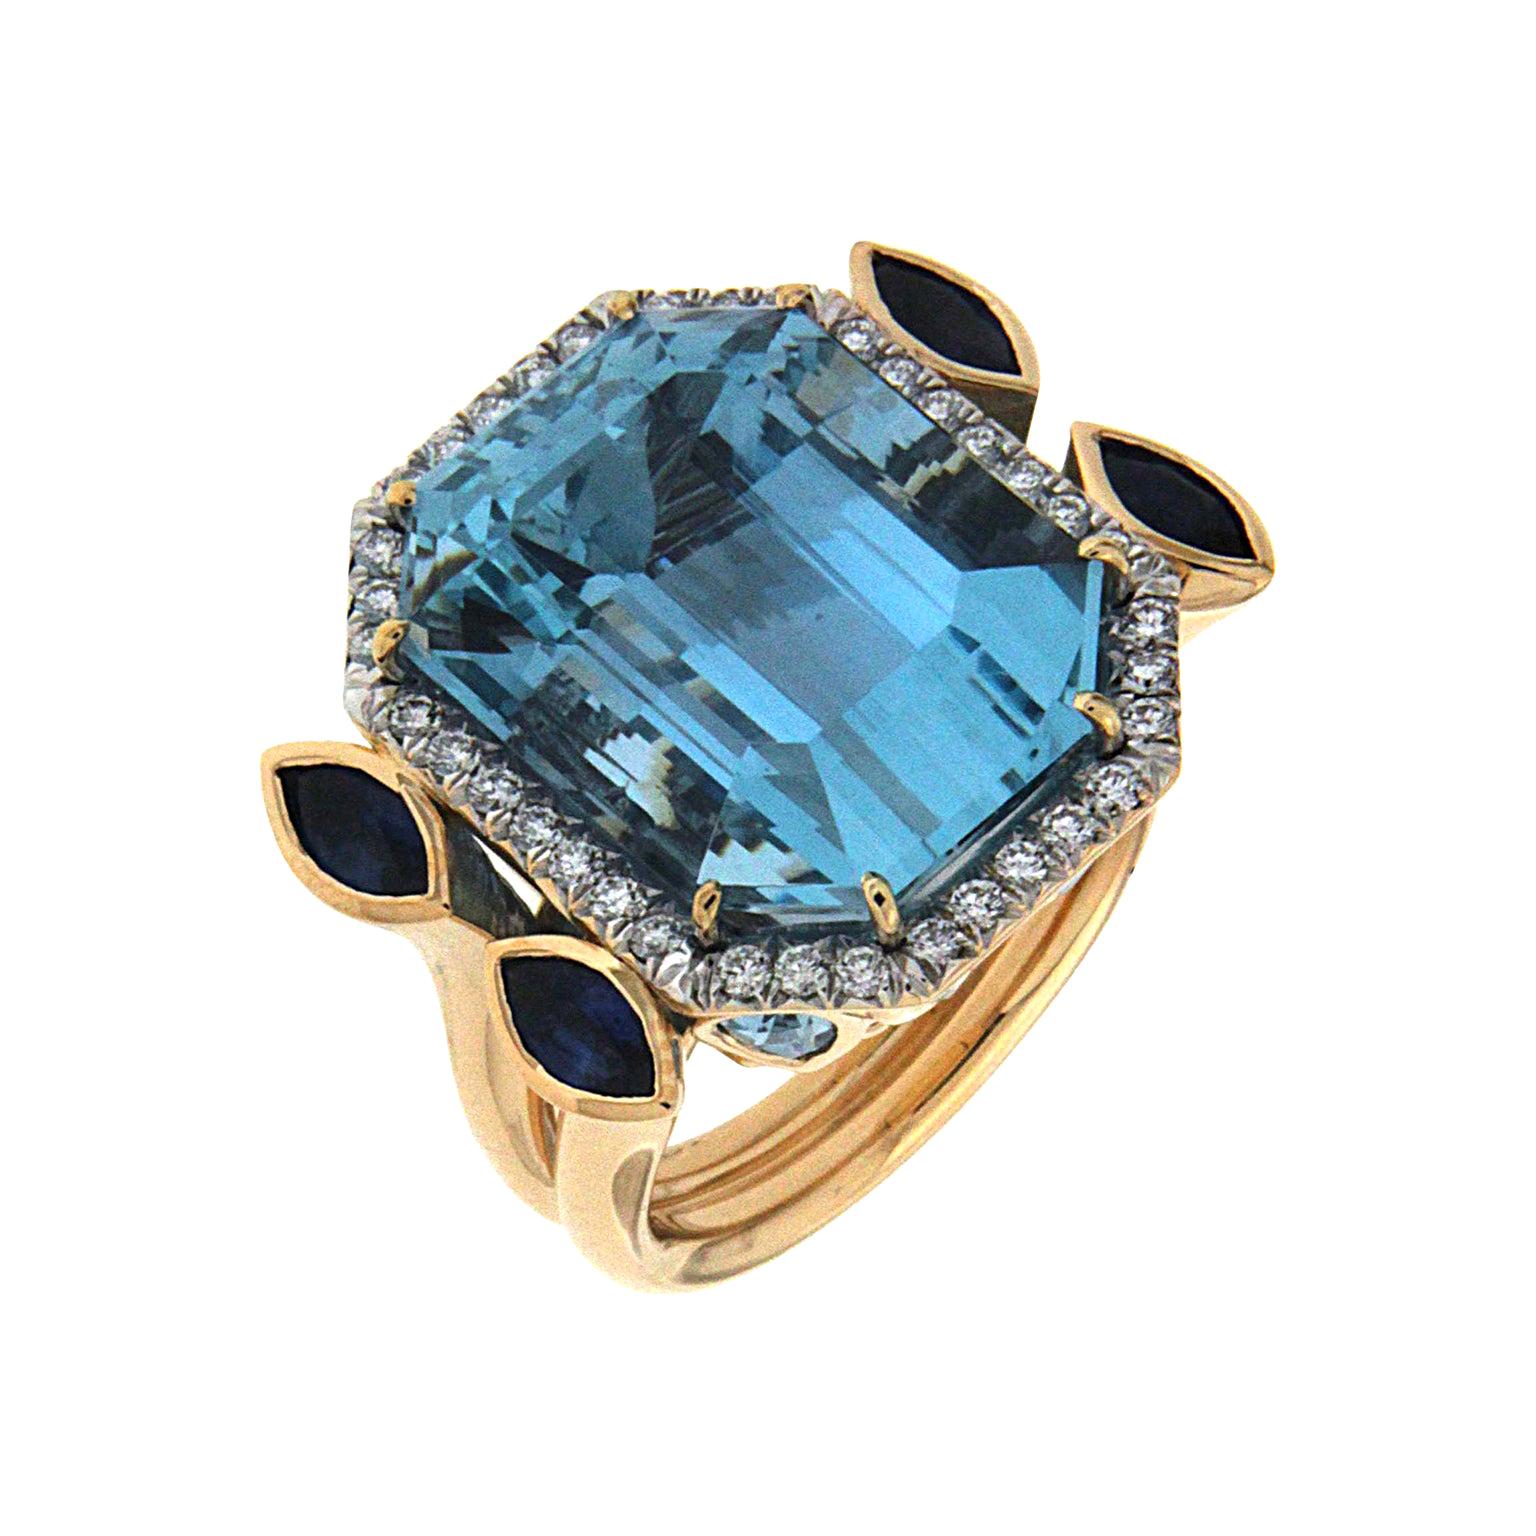 Valentin Magro Aquamarine, Sapphire and Diamond Ring in Yellow Gold